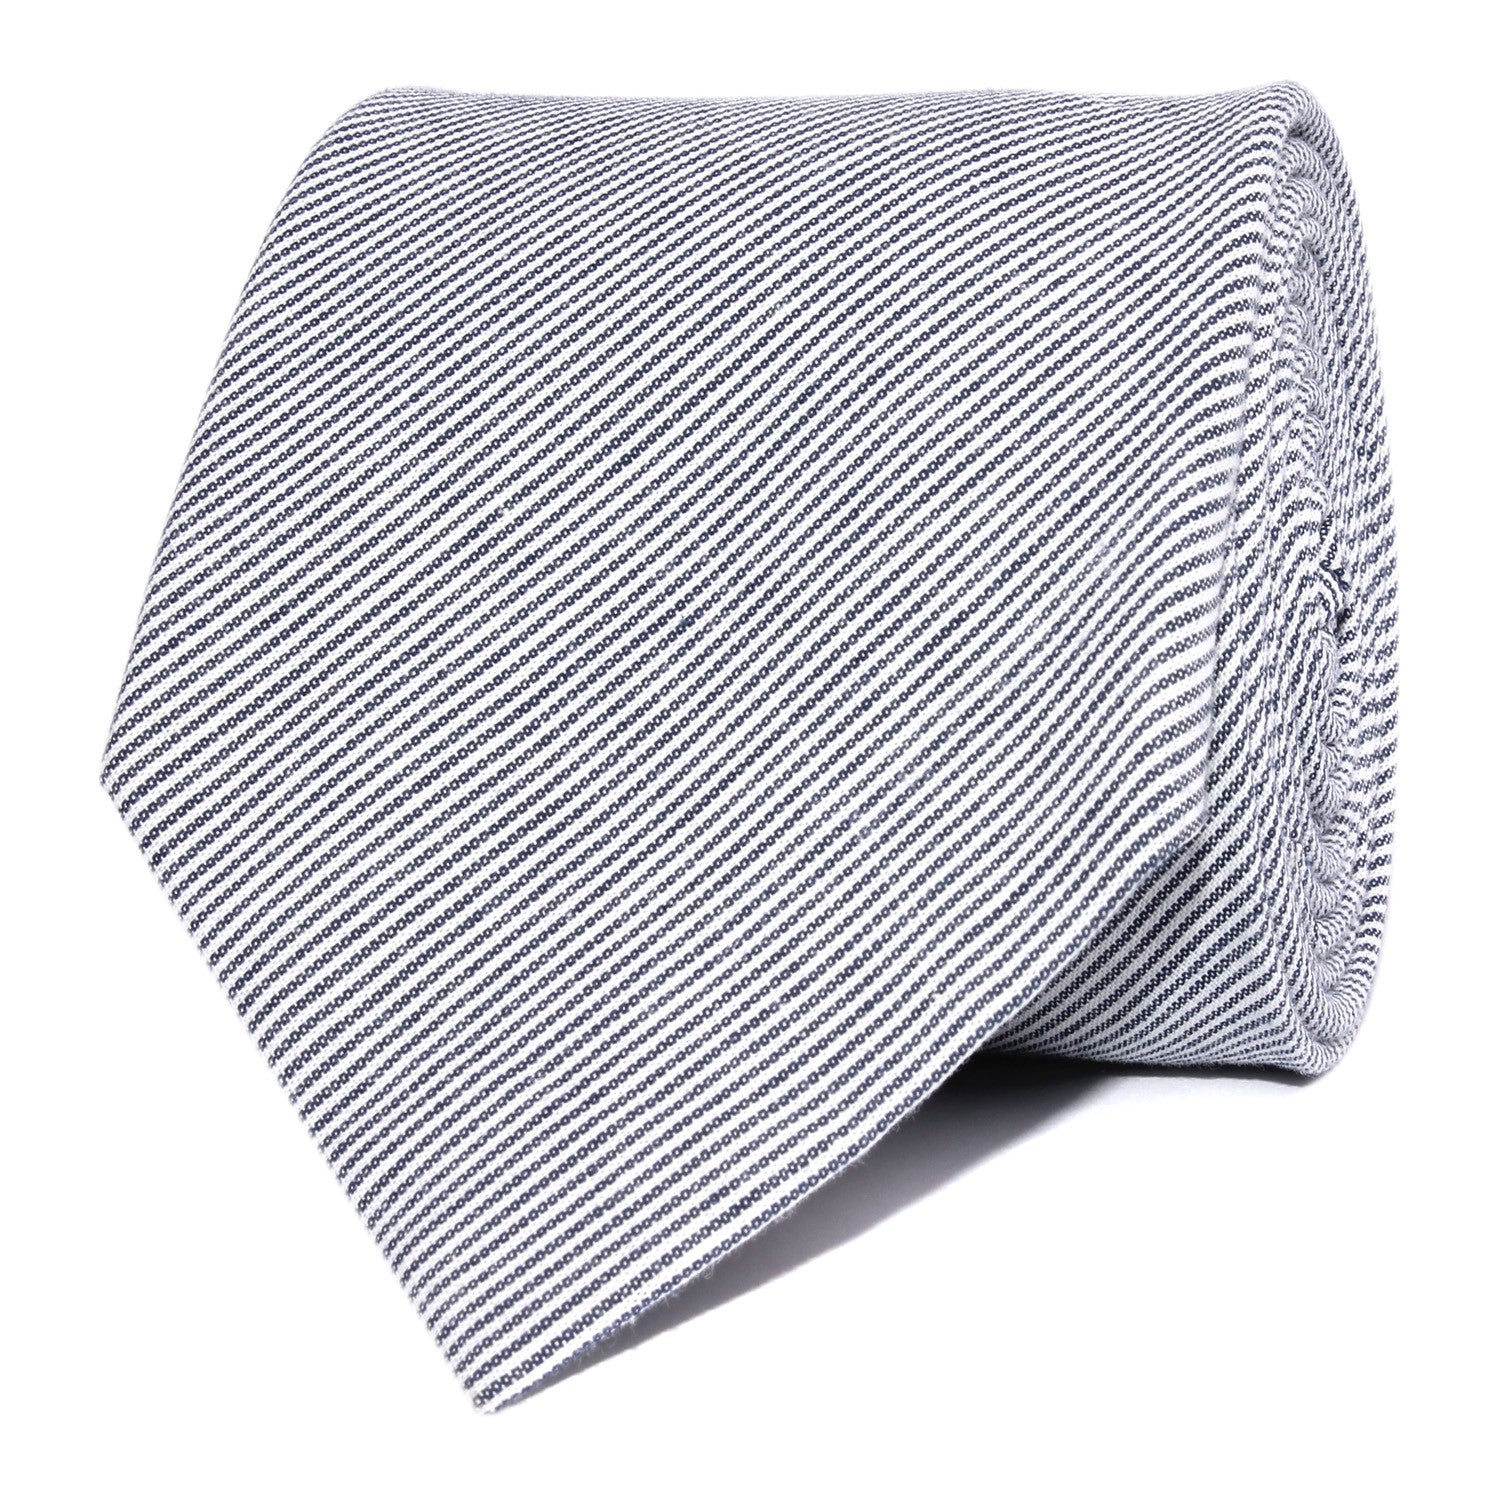 Black and White Pinstripe Cotton Necktie Front